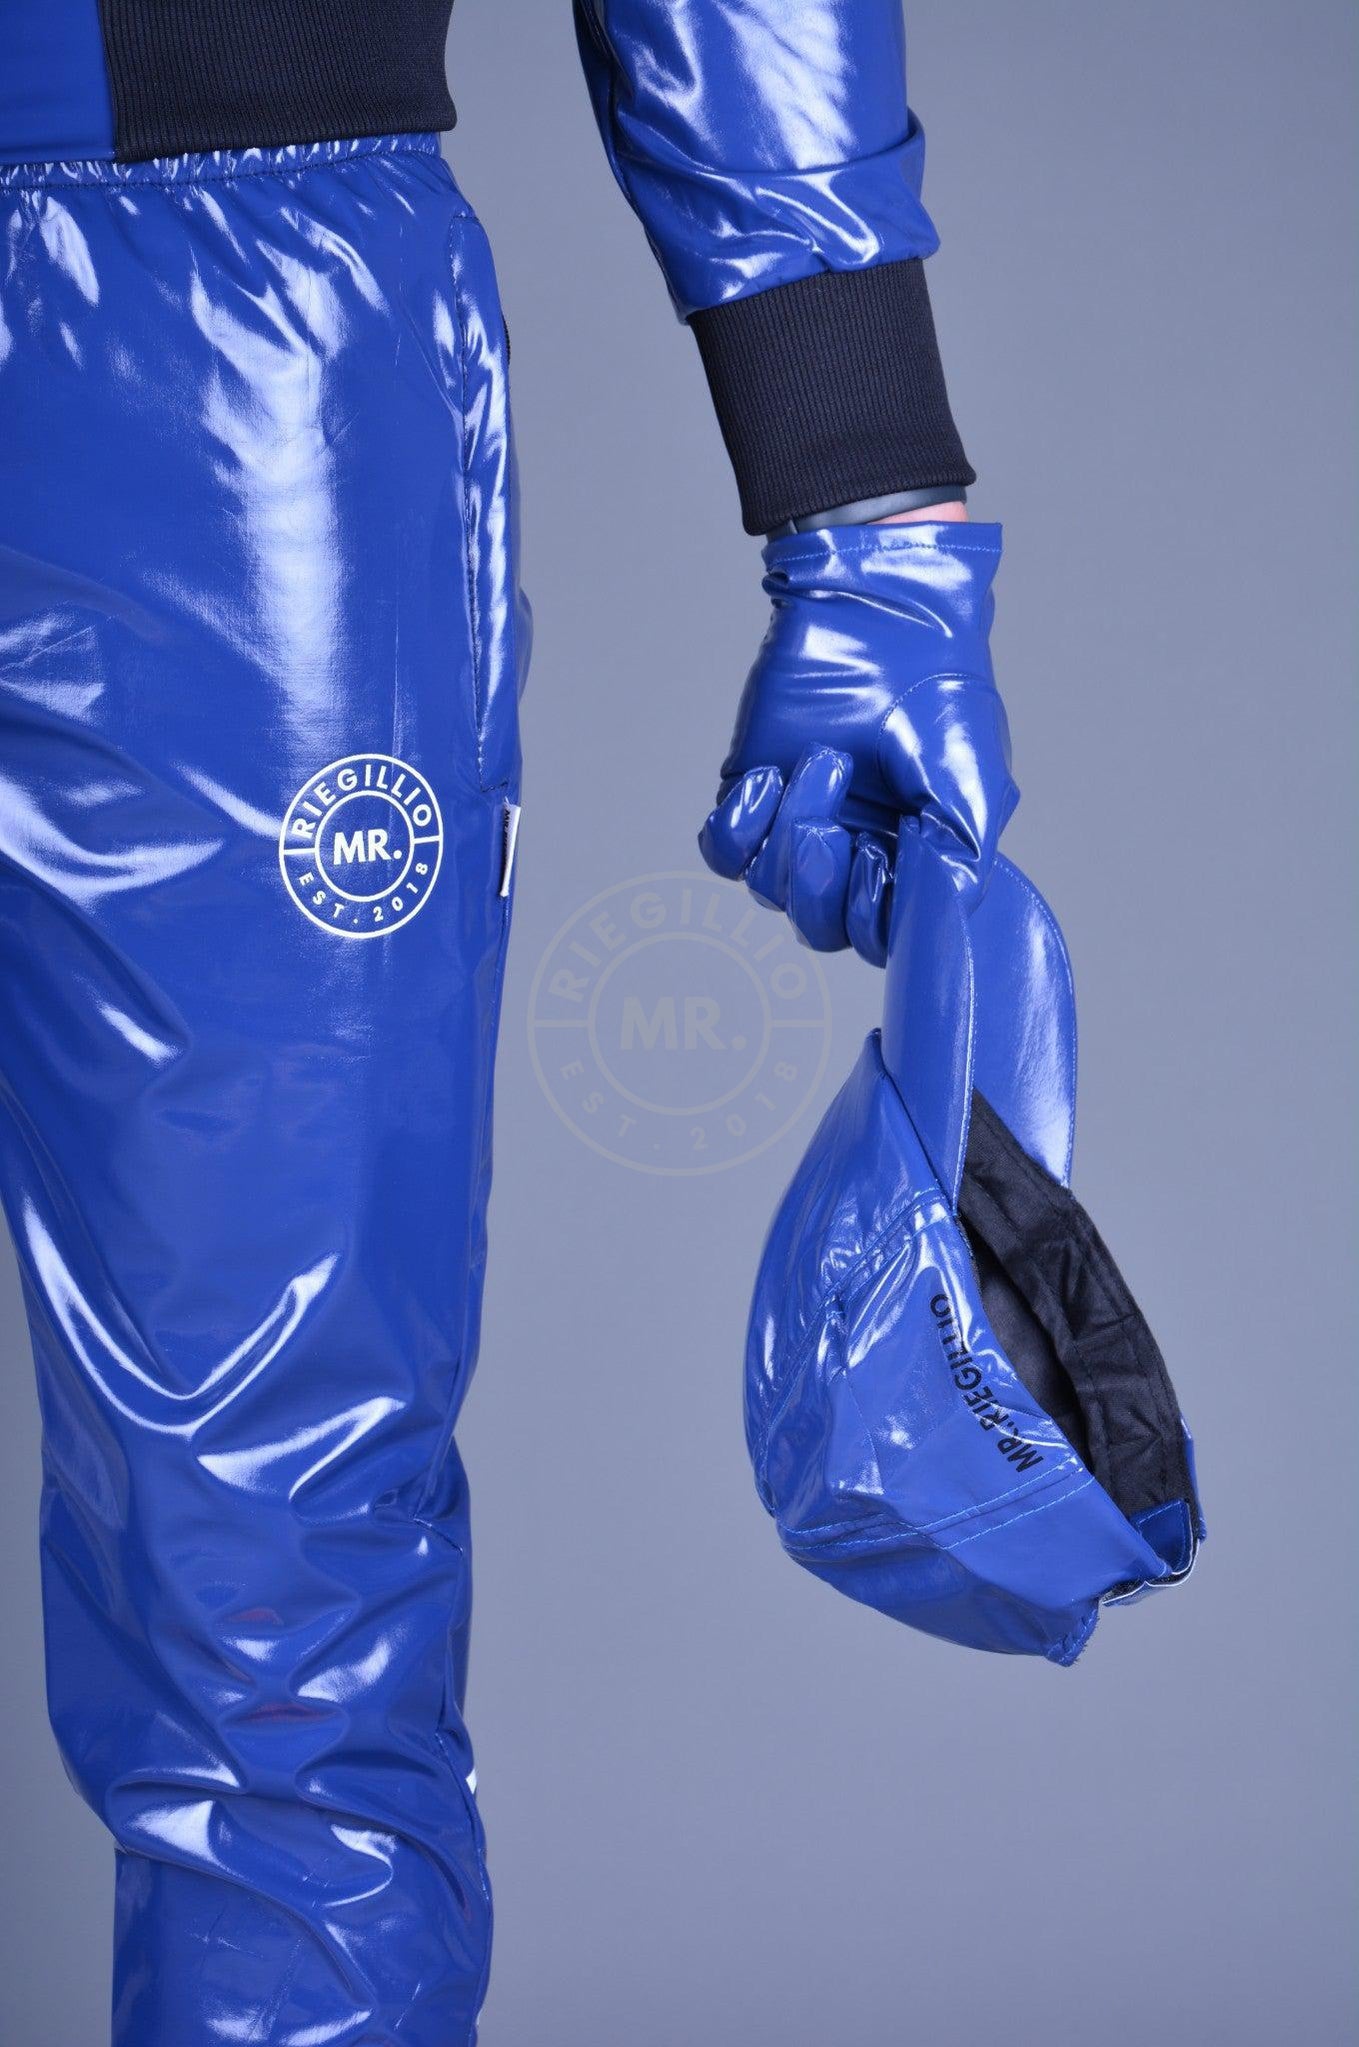 Blue PVC Gloves at MR. Riegillio